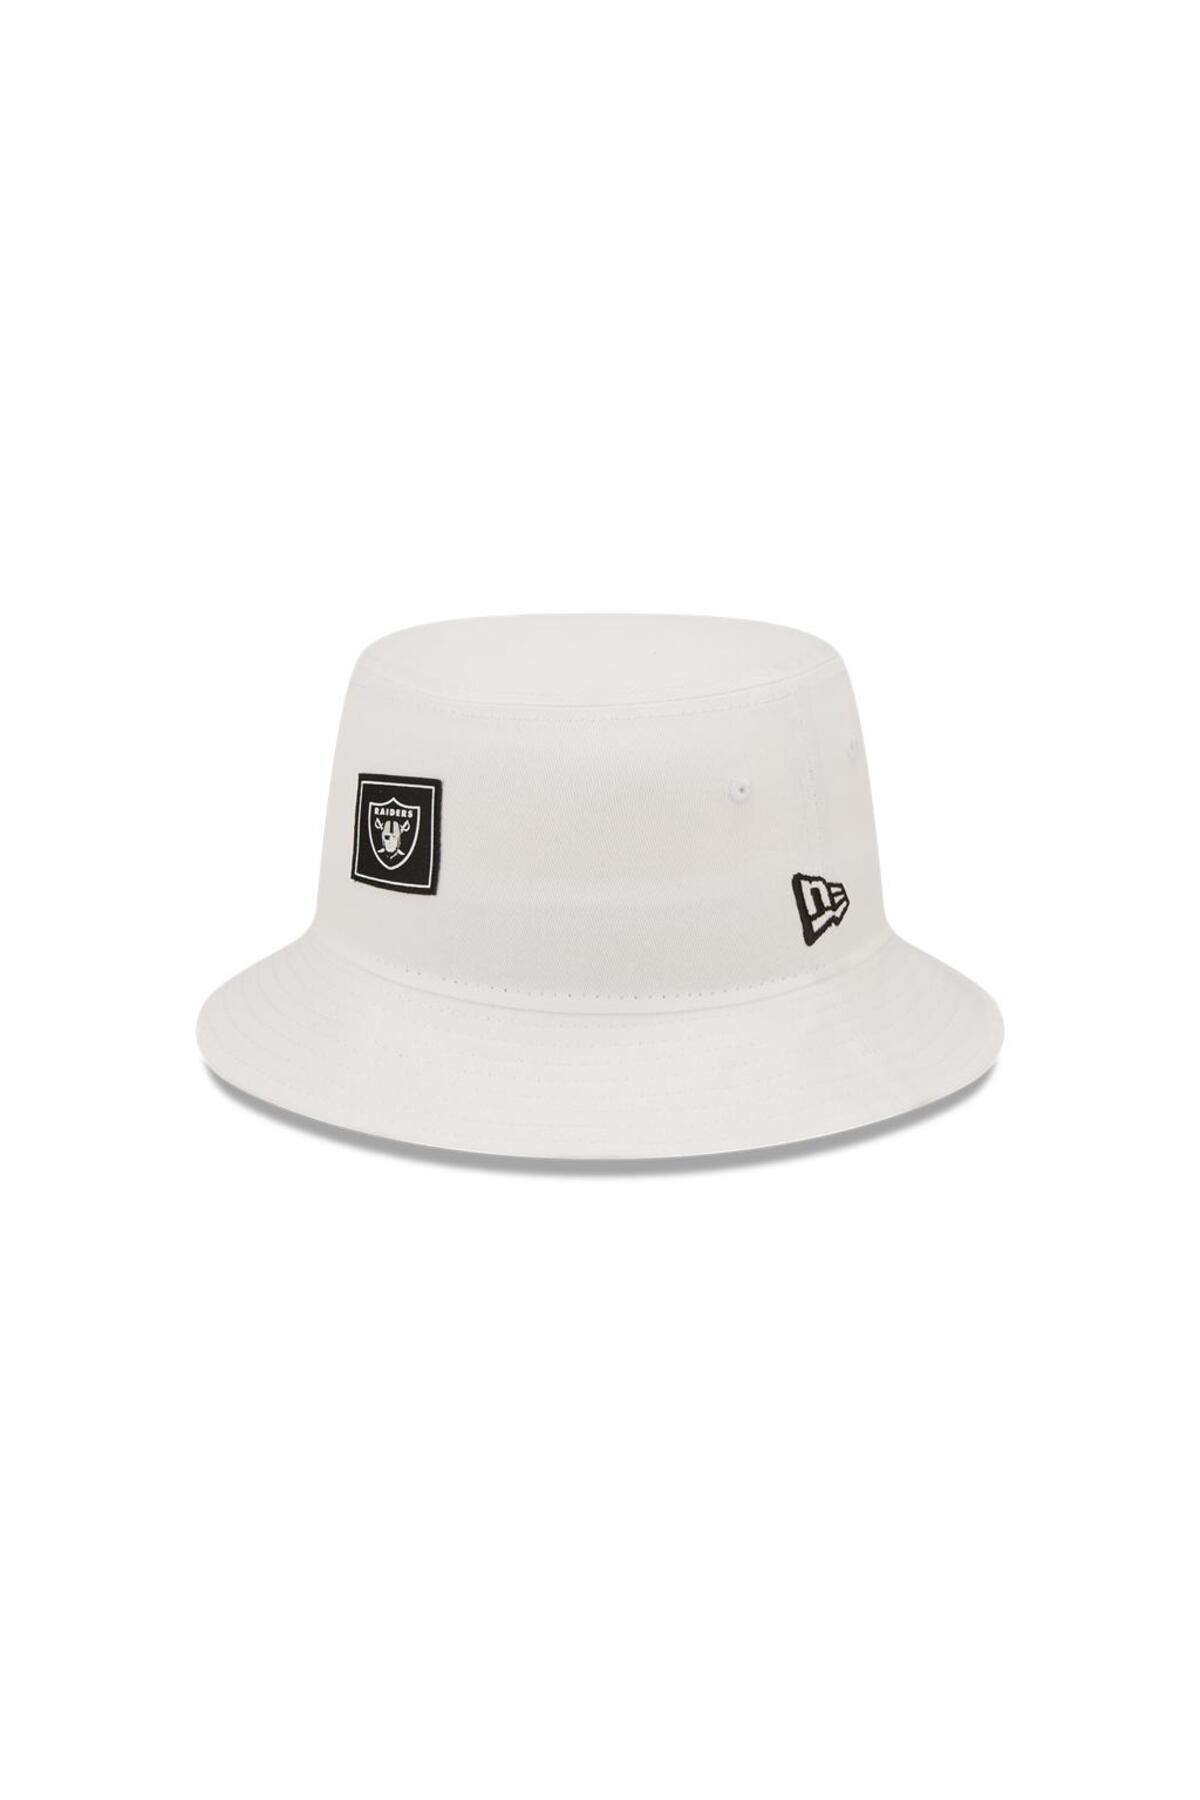 NEW ERA tapered bucket beyaz şapka